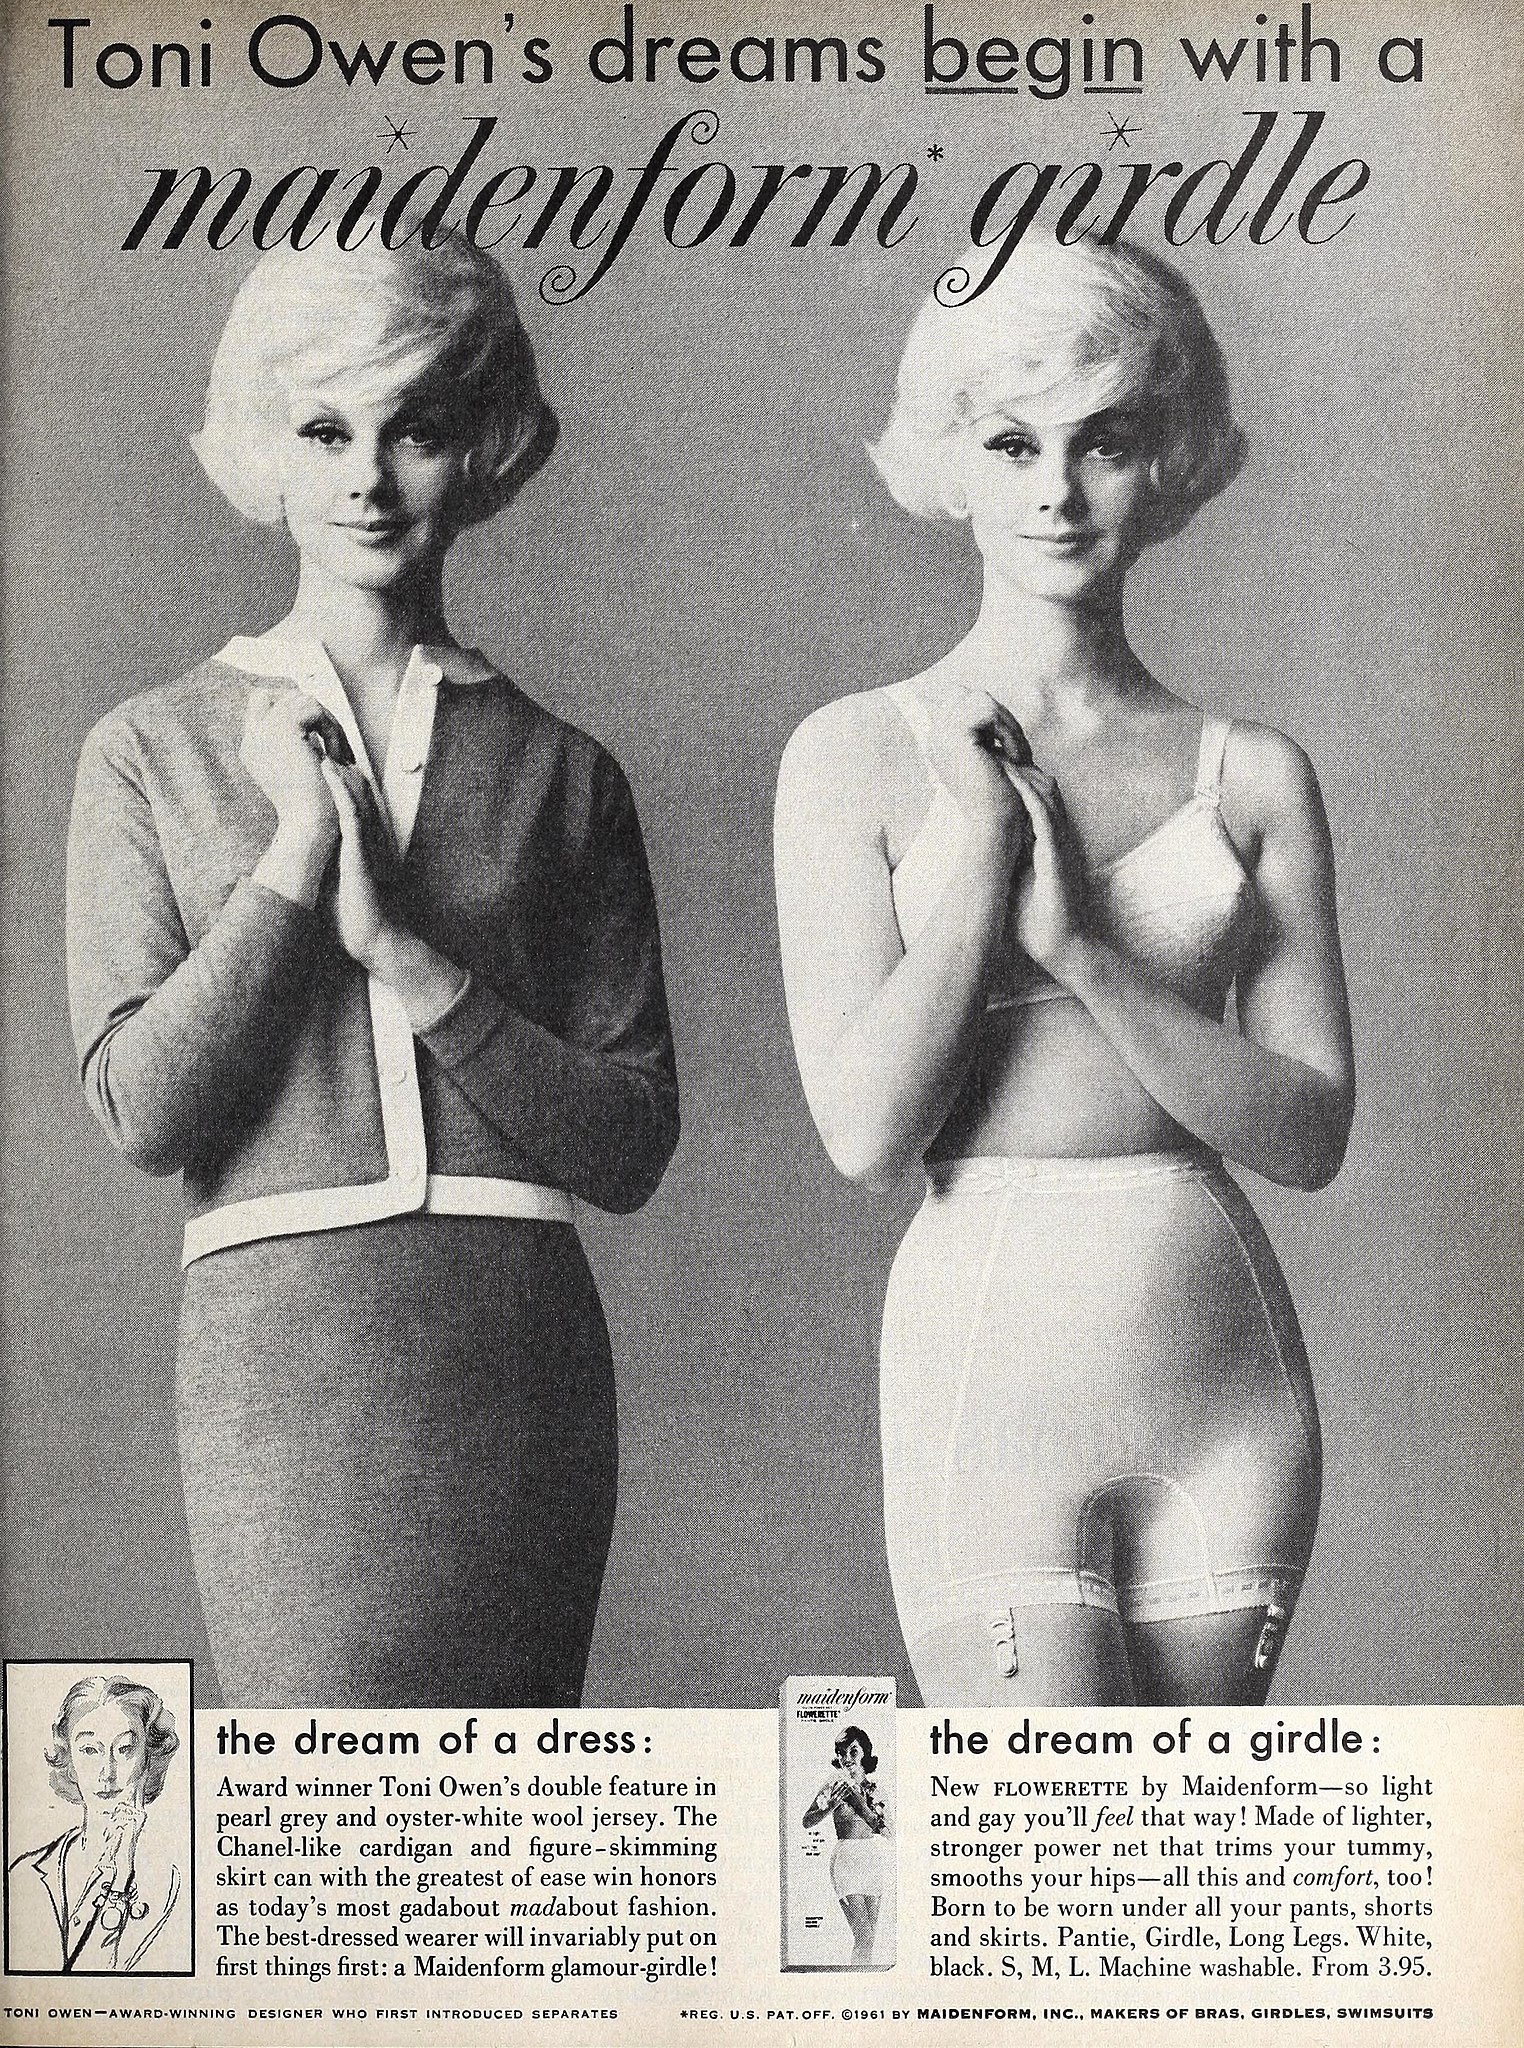 File:Toni Owen's dreams begin with a maidenform girdle, 1961.jpg -  Wikimedia Commons